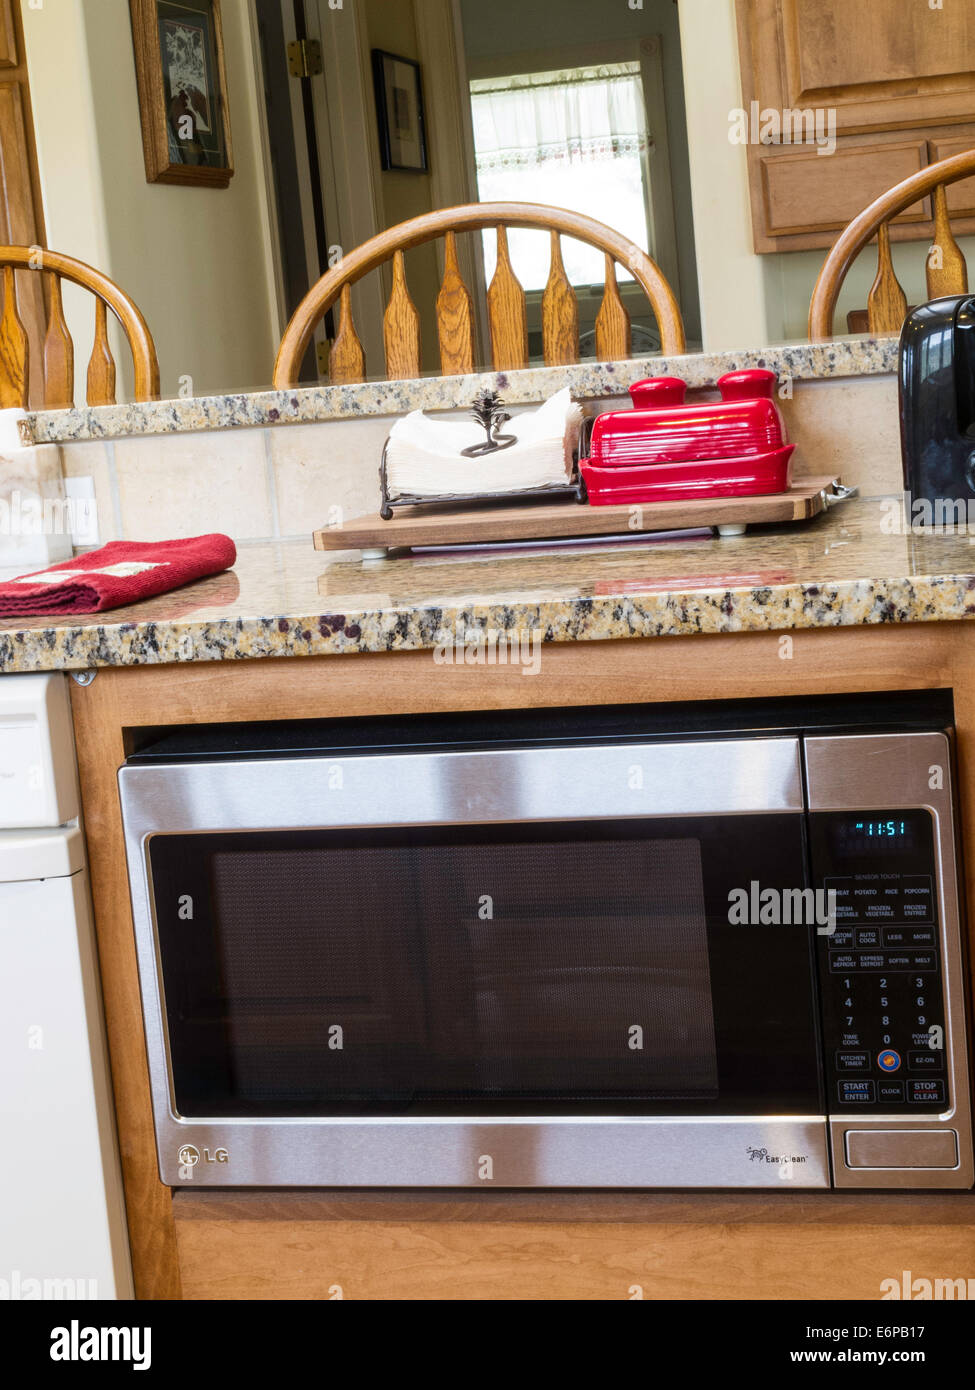 LG Rückraumgestaltung Ofen, gehobene Küche zu Hause Interieur, Mt, USA Stockfoto